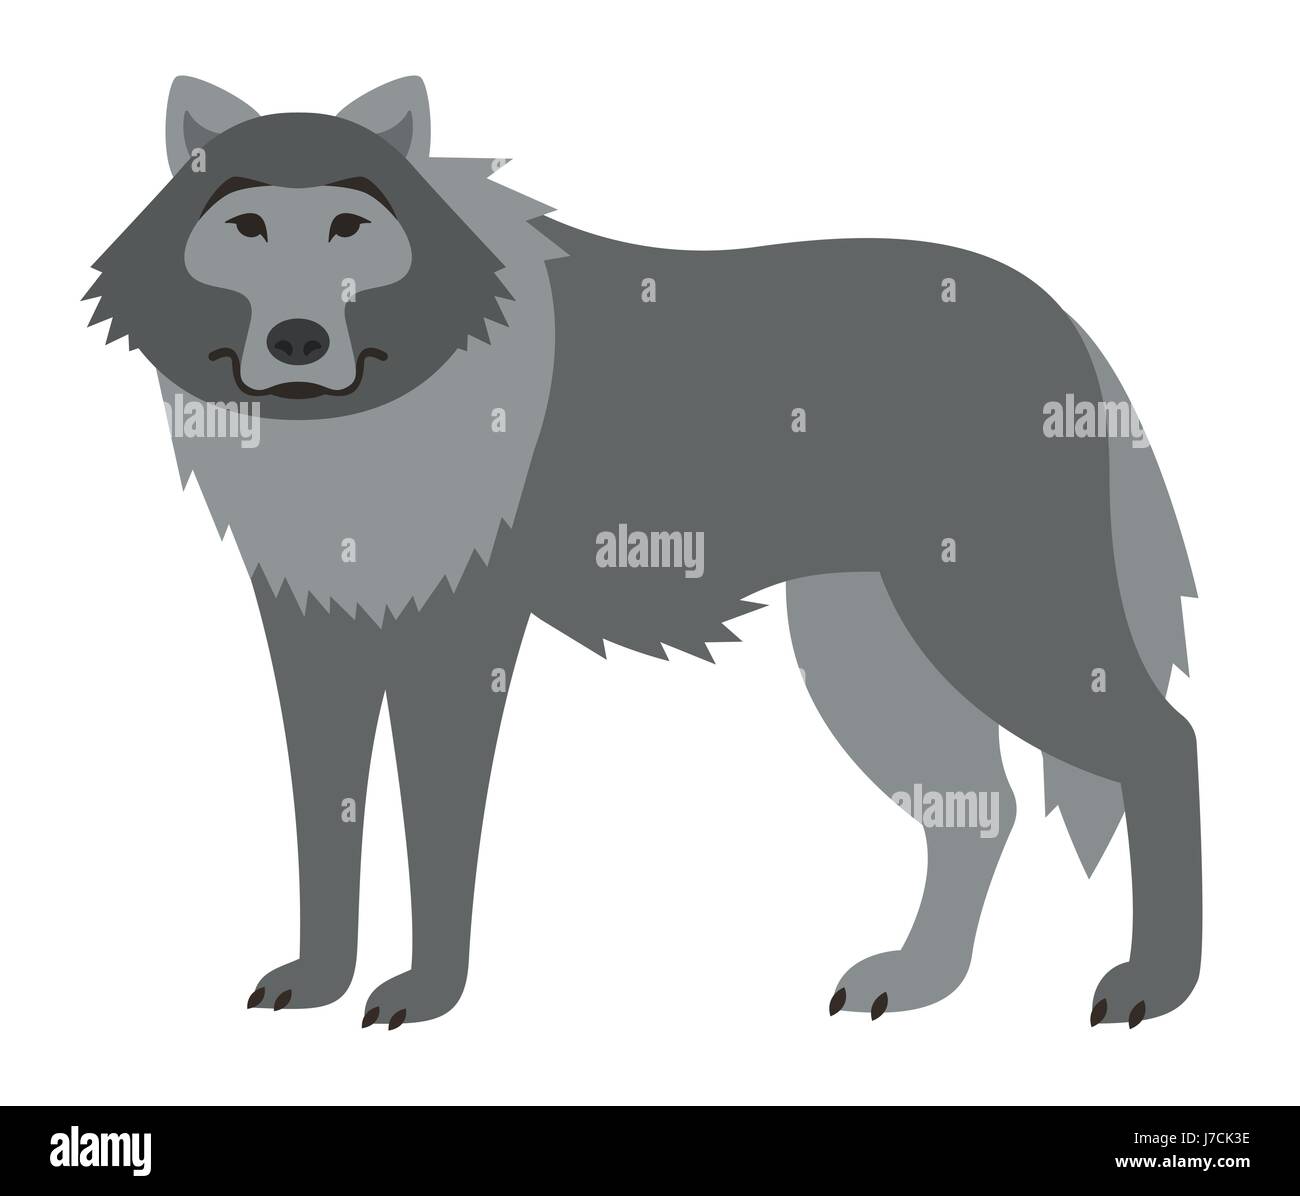 Cute smiling wolf vector cartoon illustration. Wild zoo animal icon ...